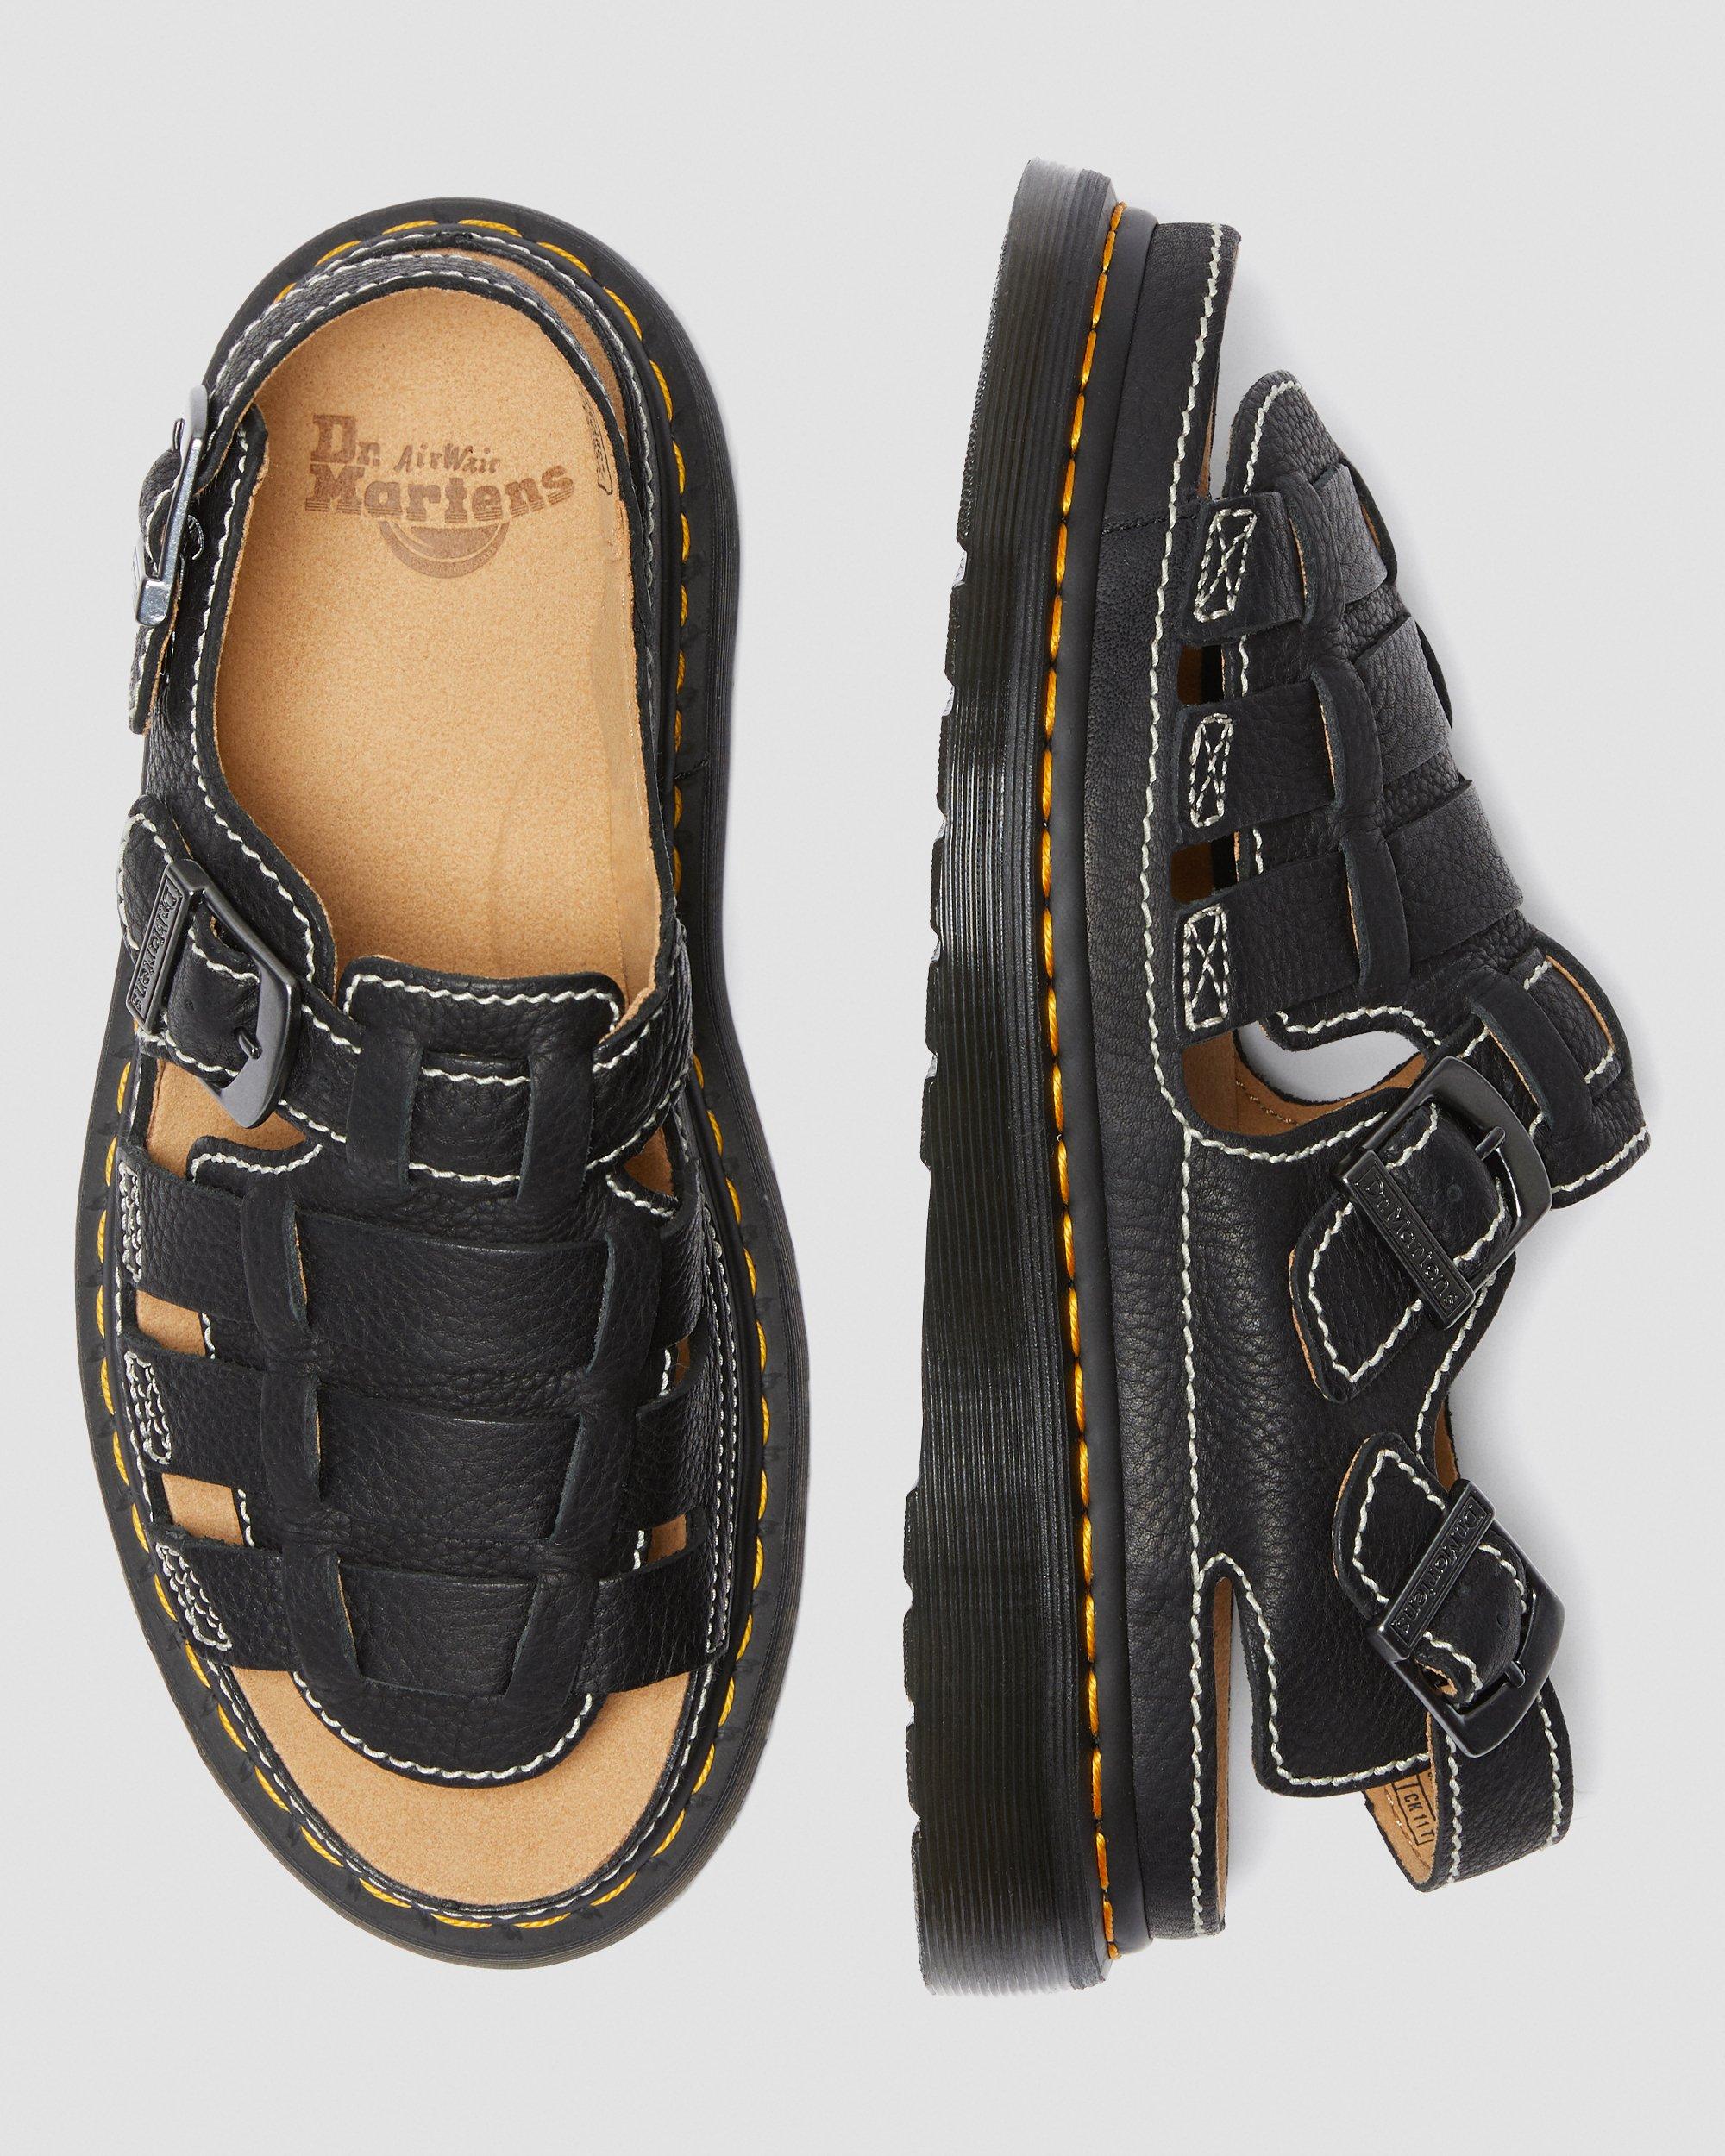 Buy > vintage dr marten sandals > in stock